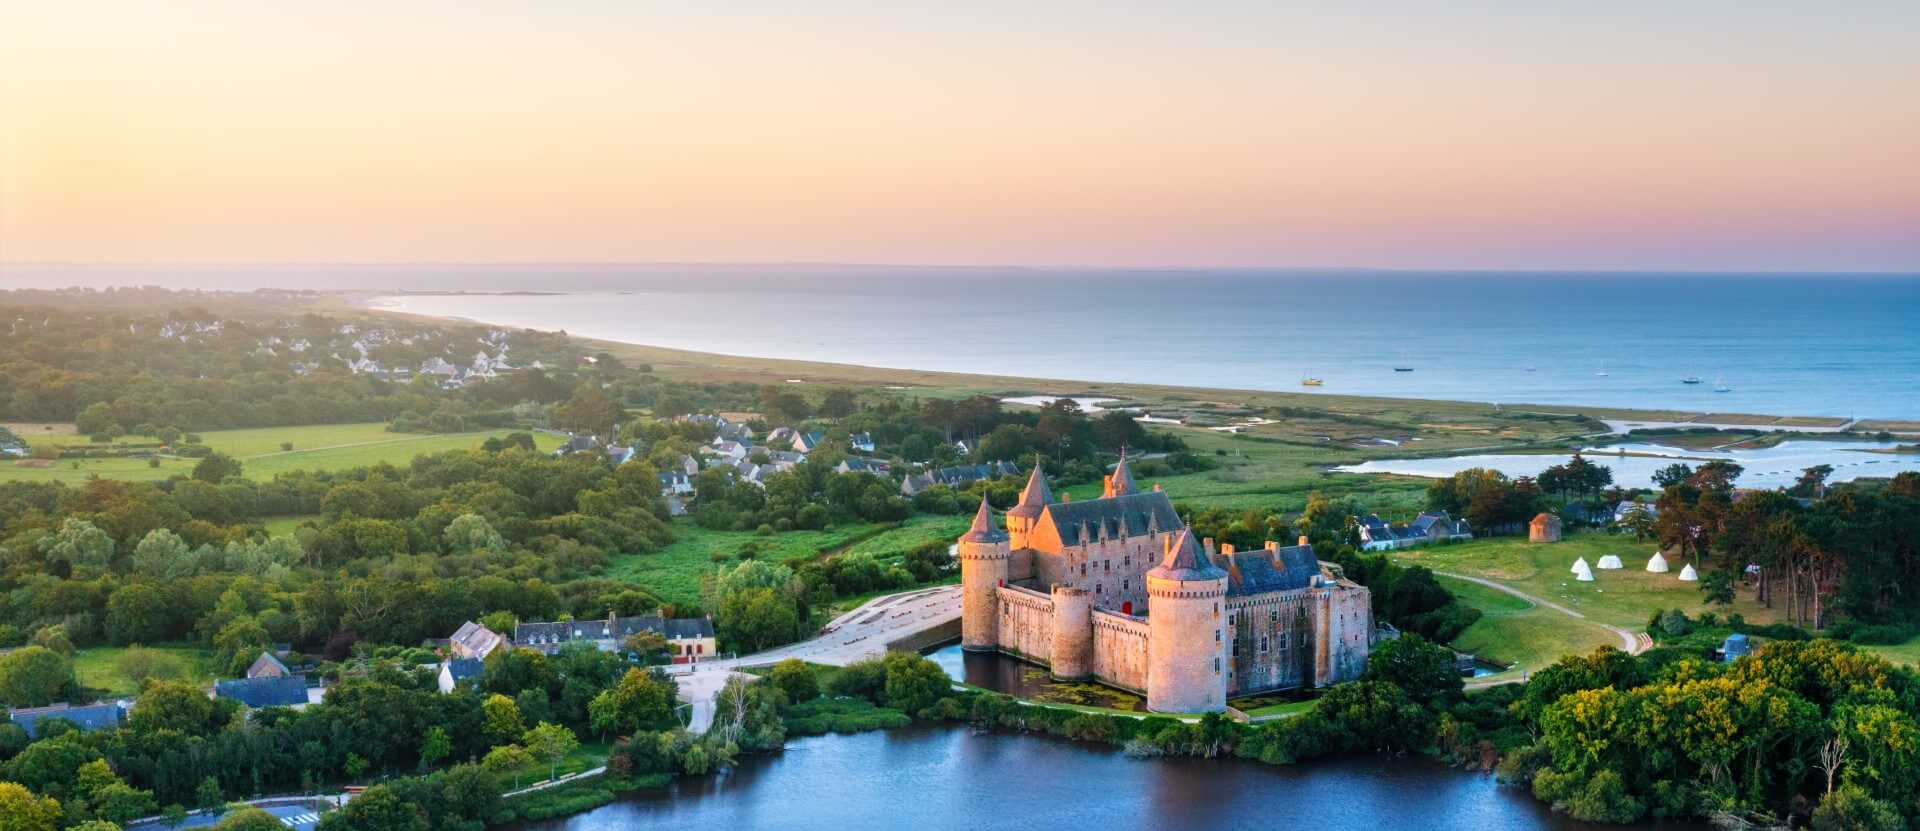 Château de Suscinio dans le Golfe du Morbihan, Bretagne - Campings à Sarzeau